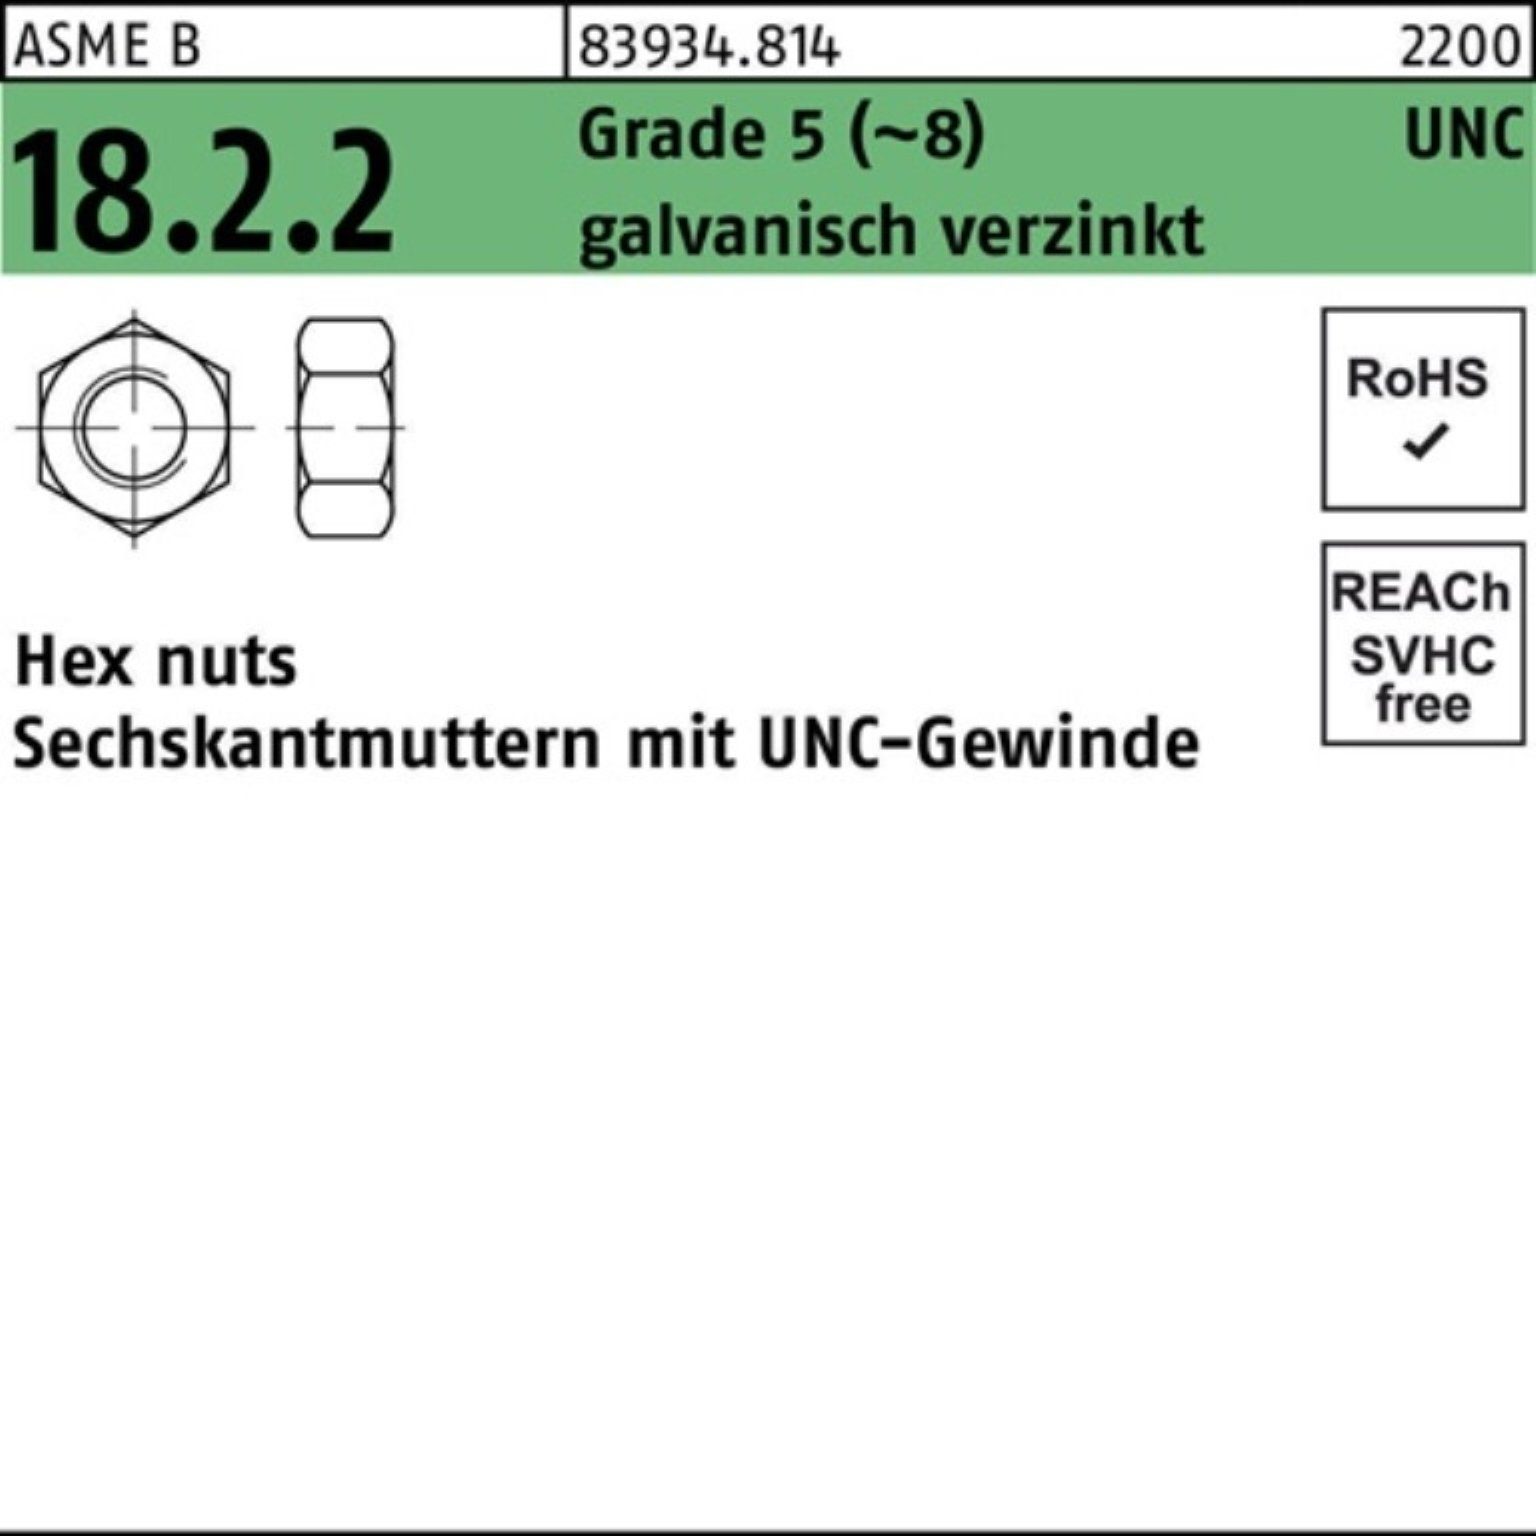 Reyher Muttern 100er Pack Sechskantmutter UNC-Gewinde (8) Grade 5 galv.v 83934 5/8 R